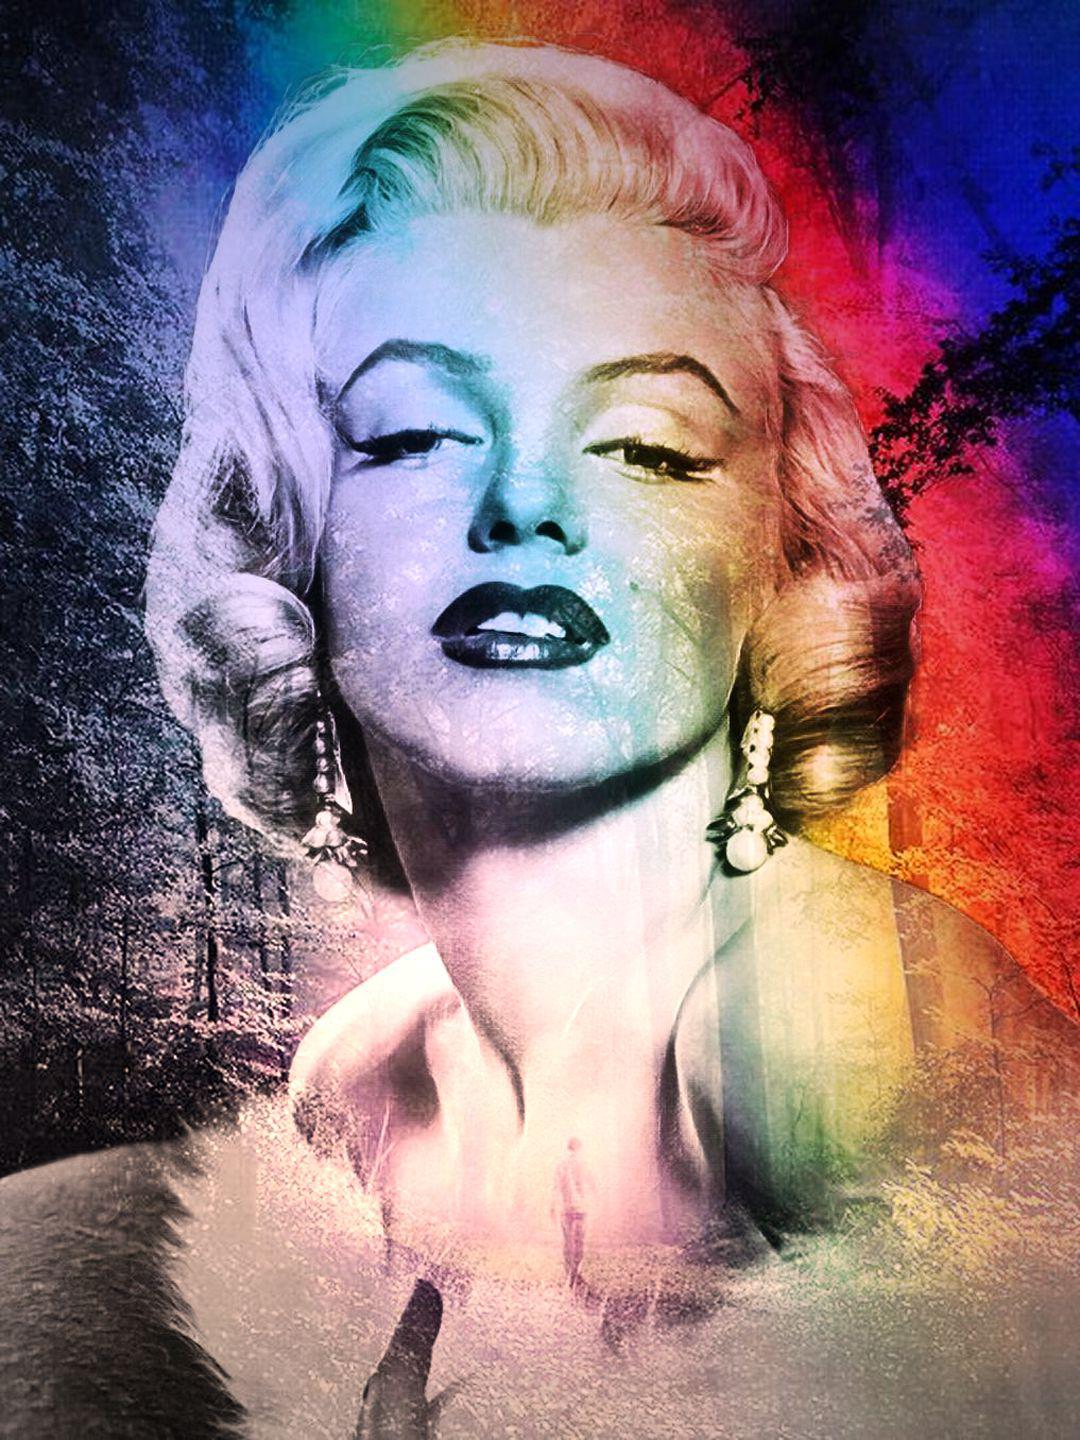 Anna Lynn Porn Star Masturbation - Marilyn Monroe - Celeb ART - Beautiful Artworks of Celebrities,  Footballers, Politicians and Famous People in World | OpenSea